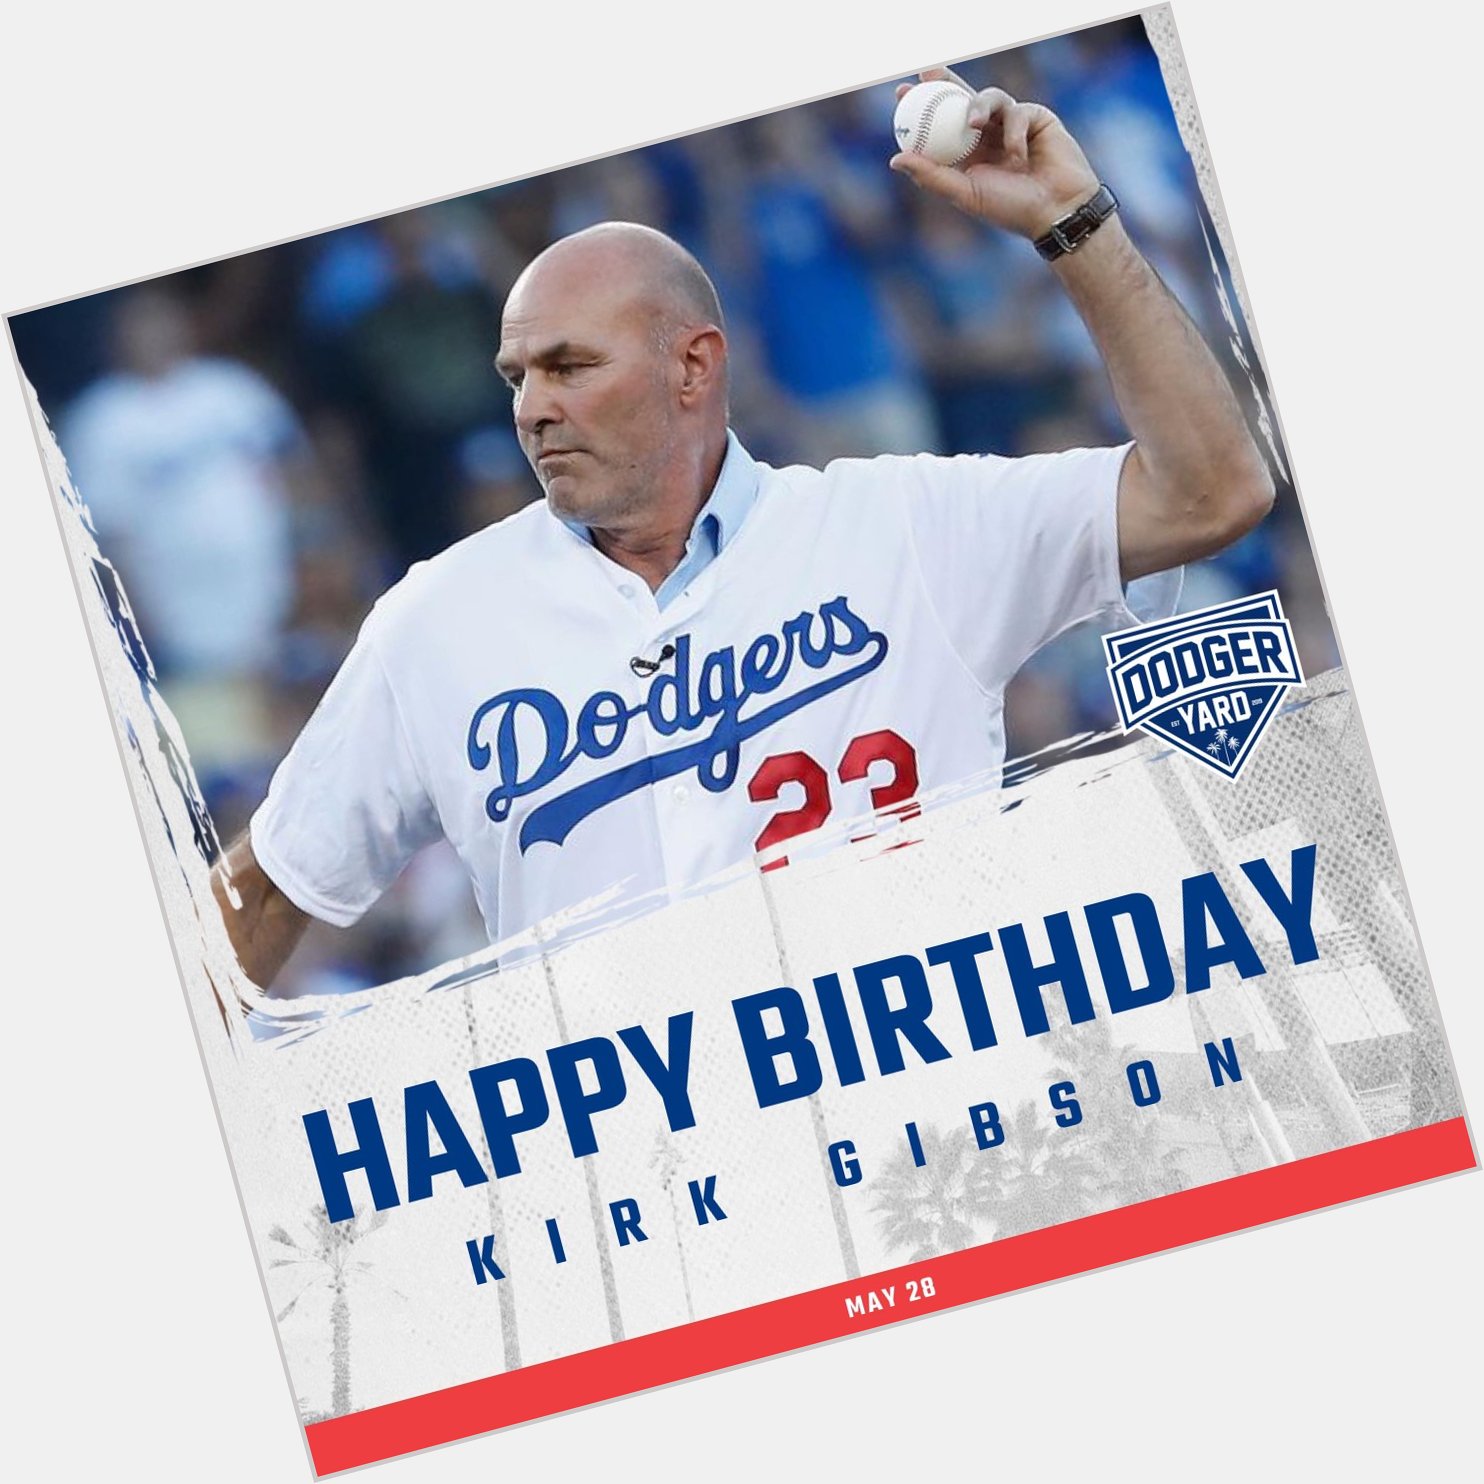 Happy birthday, Kirk Gibson! 